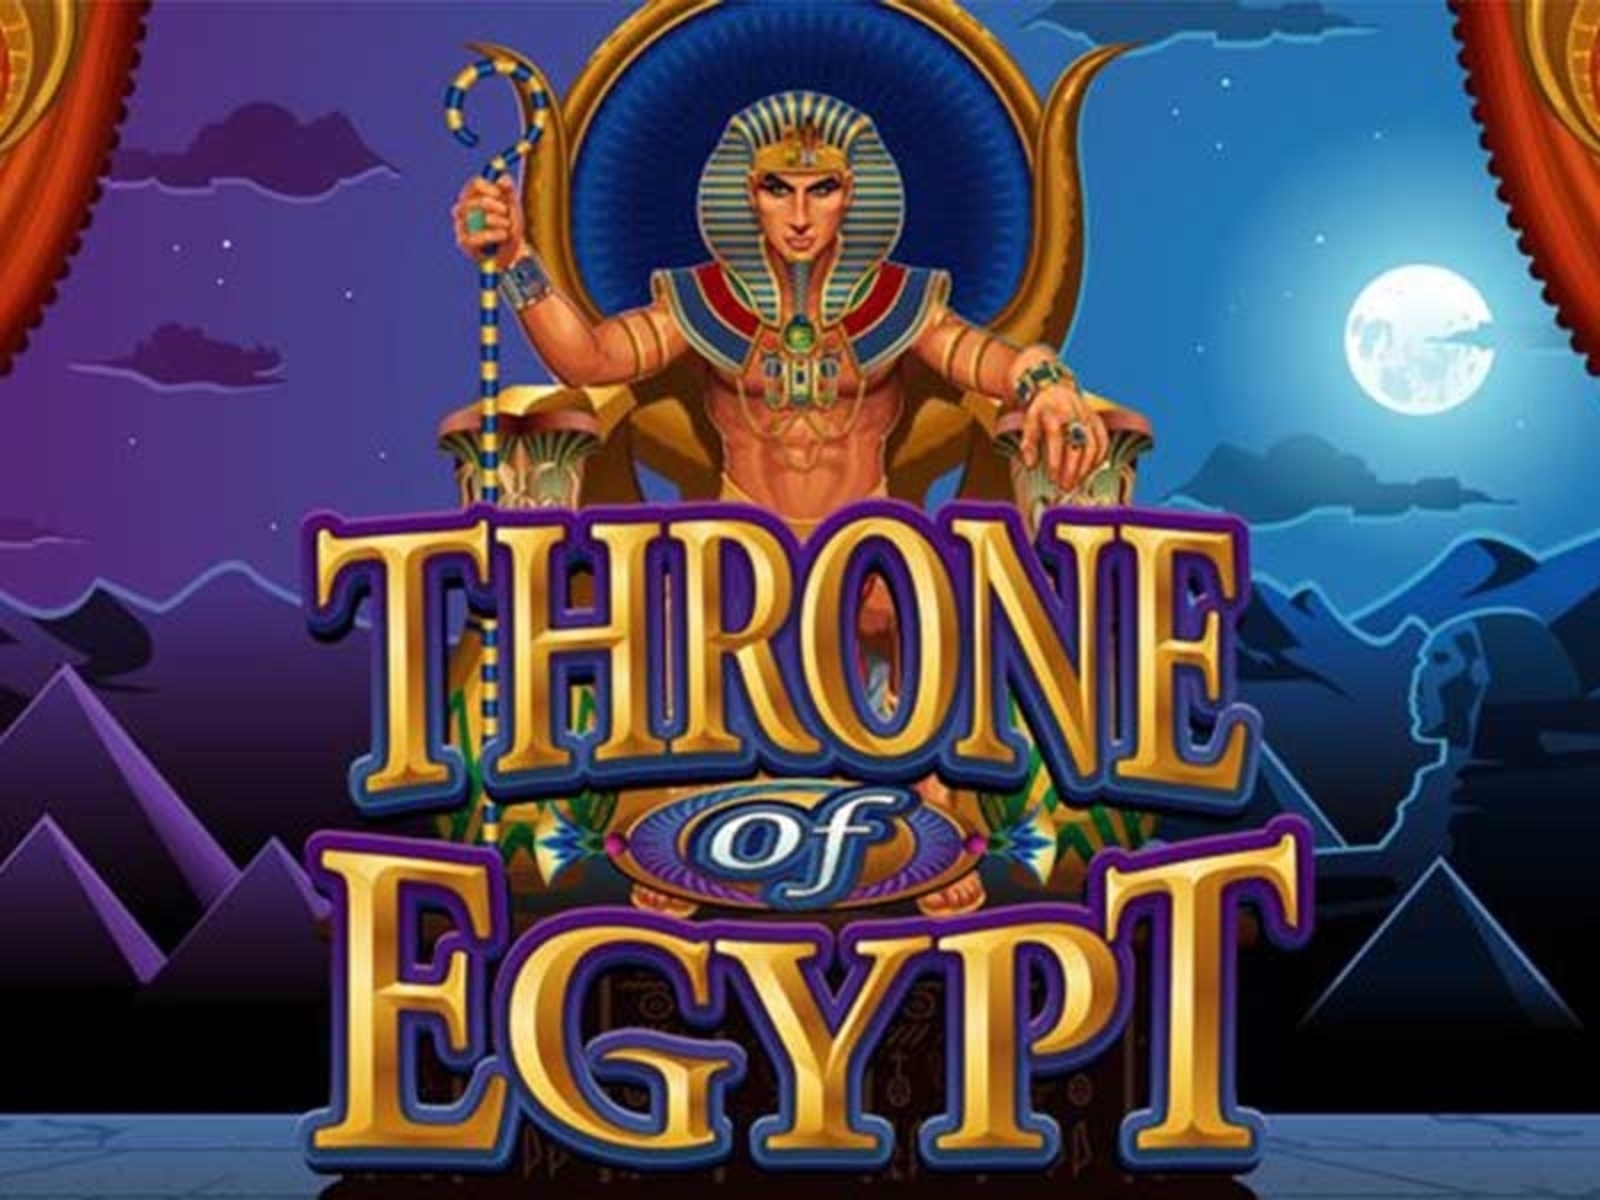 Throne of Egypt demo